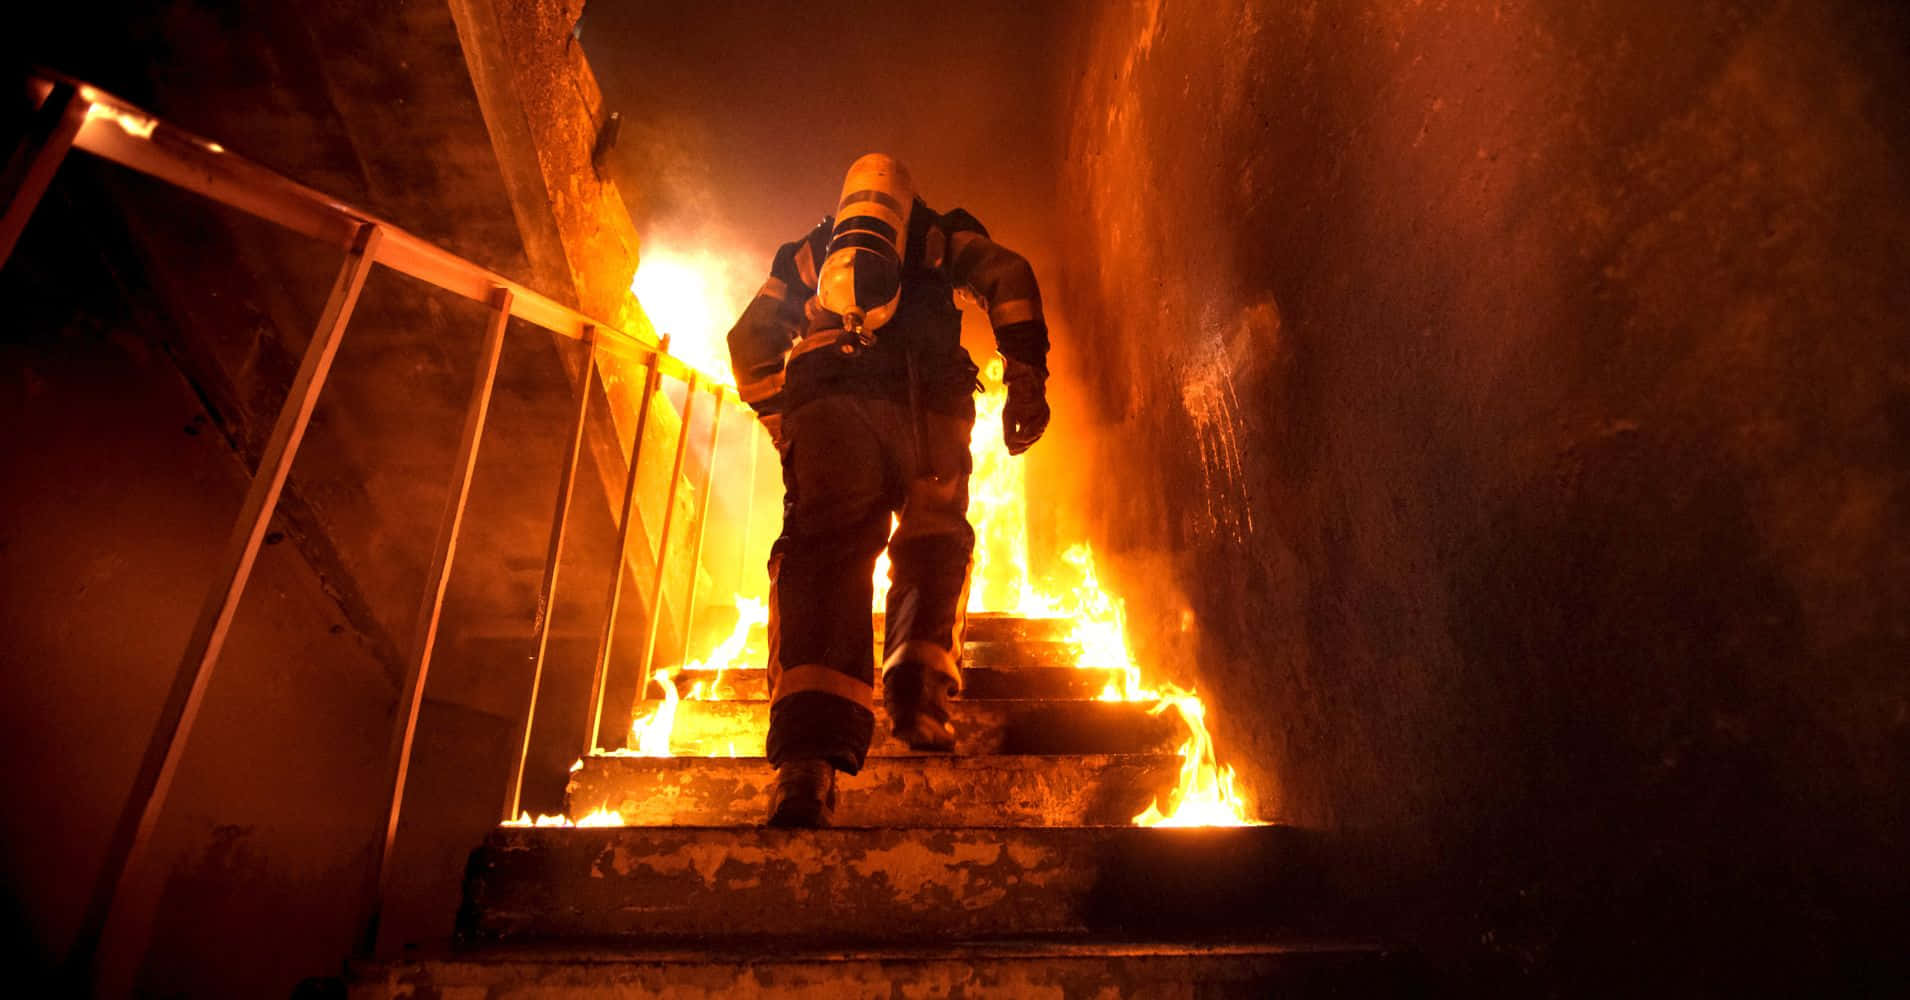 A brave Firefighter enters a dangerous blaze.